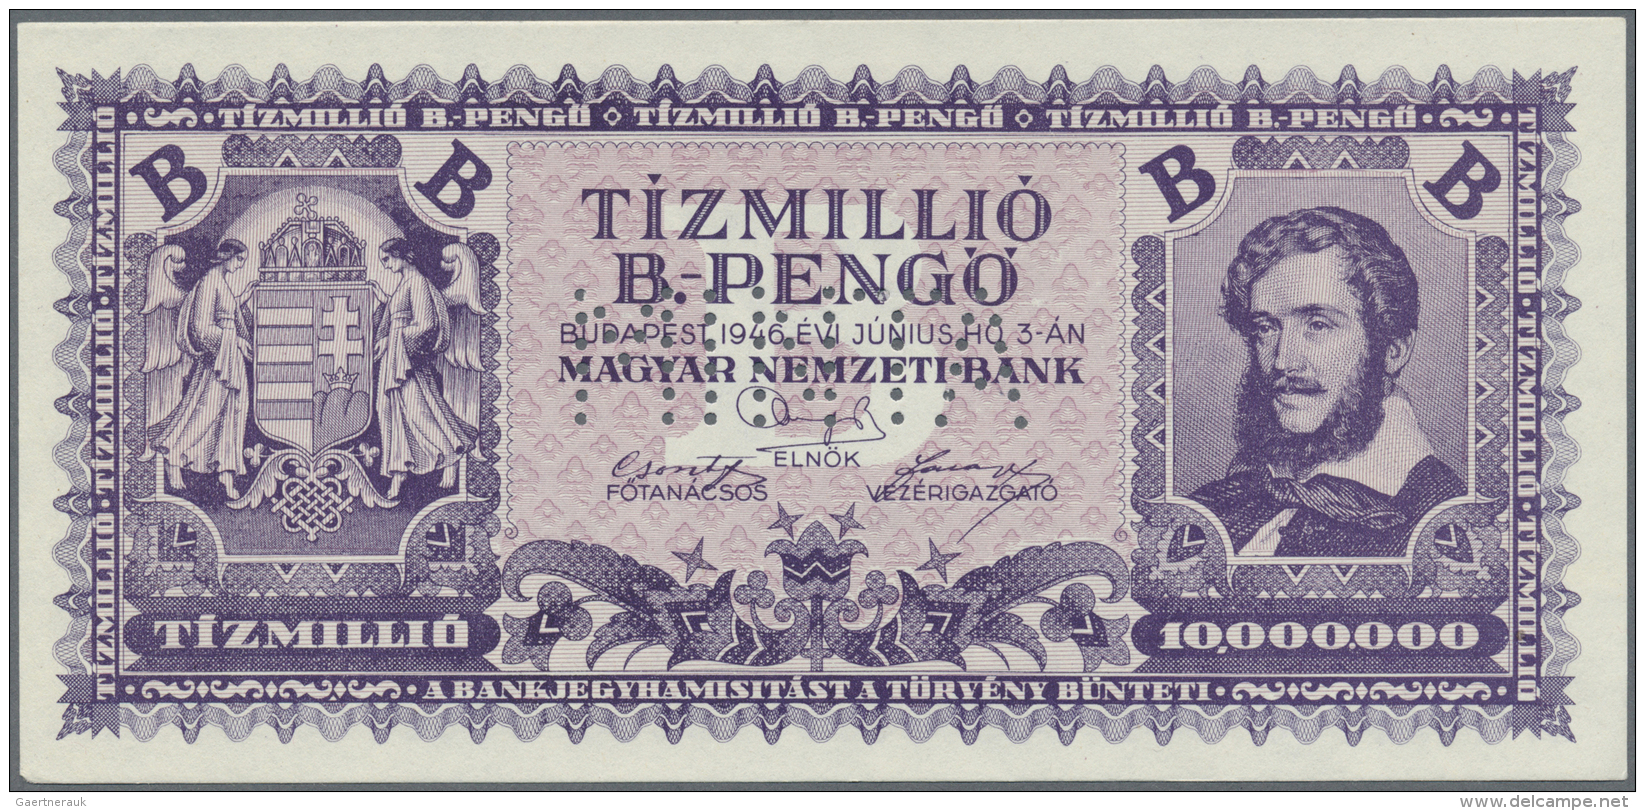 Hungary / Ungarn:  10.000.000 B.-PengÅ‘ (=10.000.000.000.000.000.000 PengÅ‘) 1946 With Perforation "MINTA" (Specimen), P - Ungheria